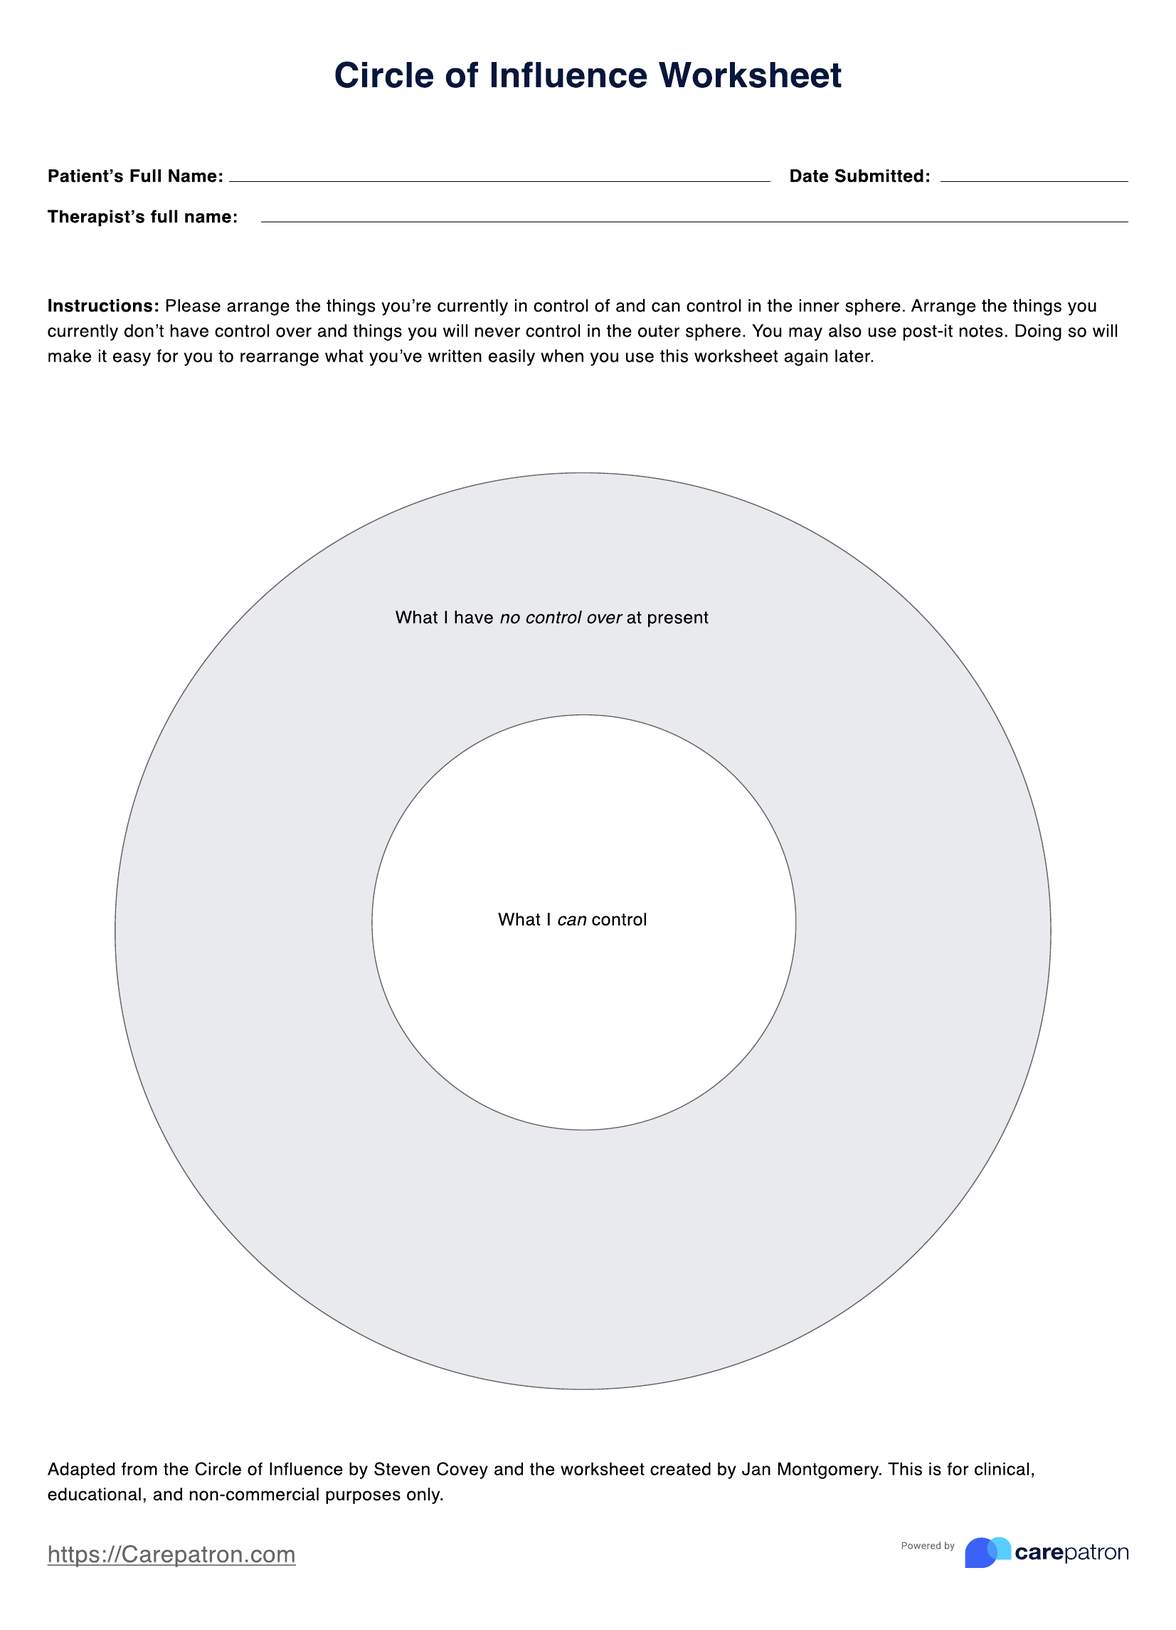 Circle of Influence Worksheet PDF Example